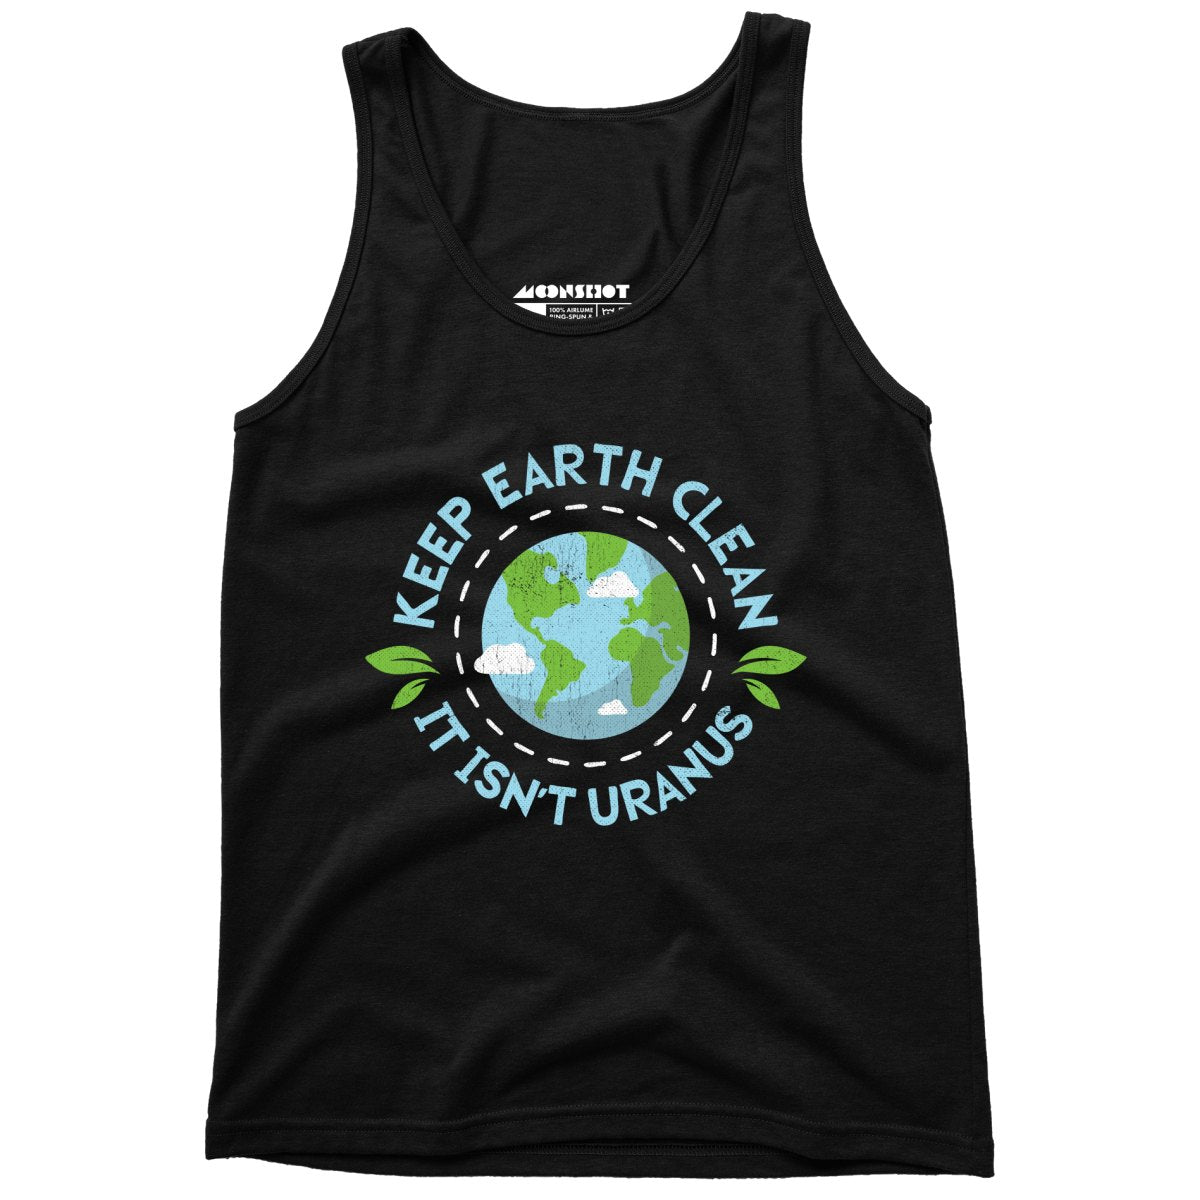 Keep Earth Clean It Isn't Uranus - Unisex Tank Top